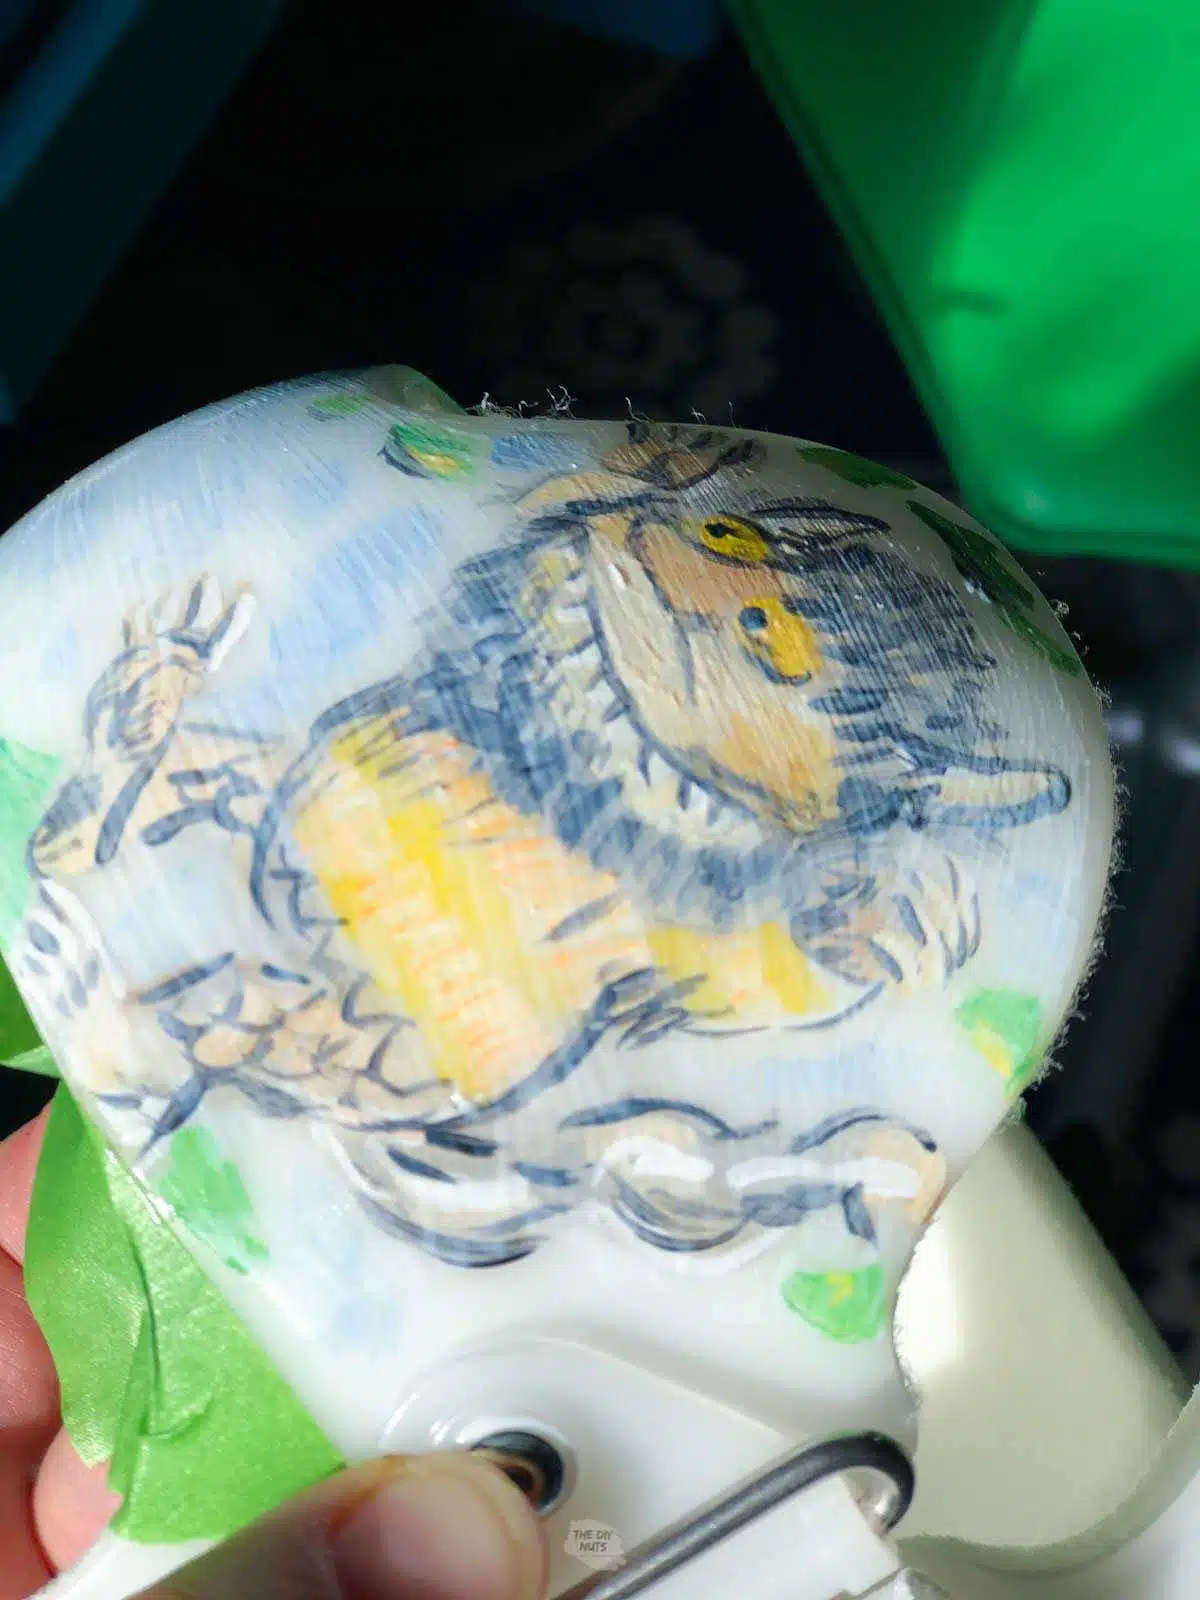 Wet mod podge on baby helmet over painted design.